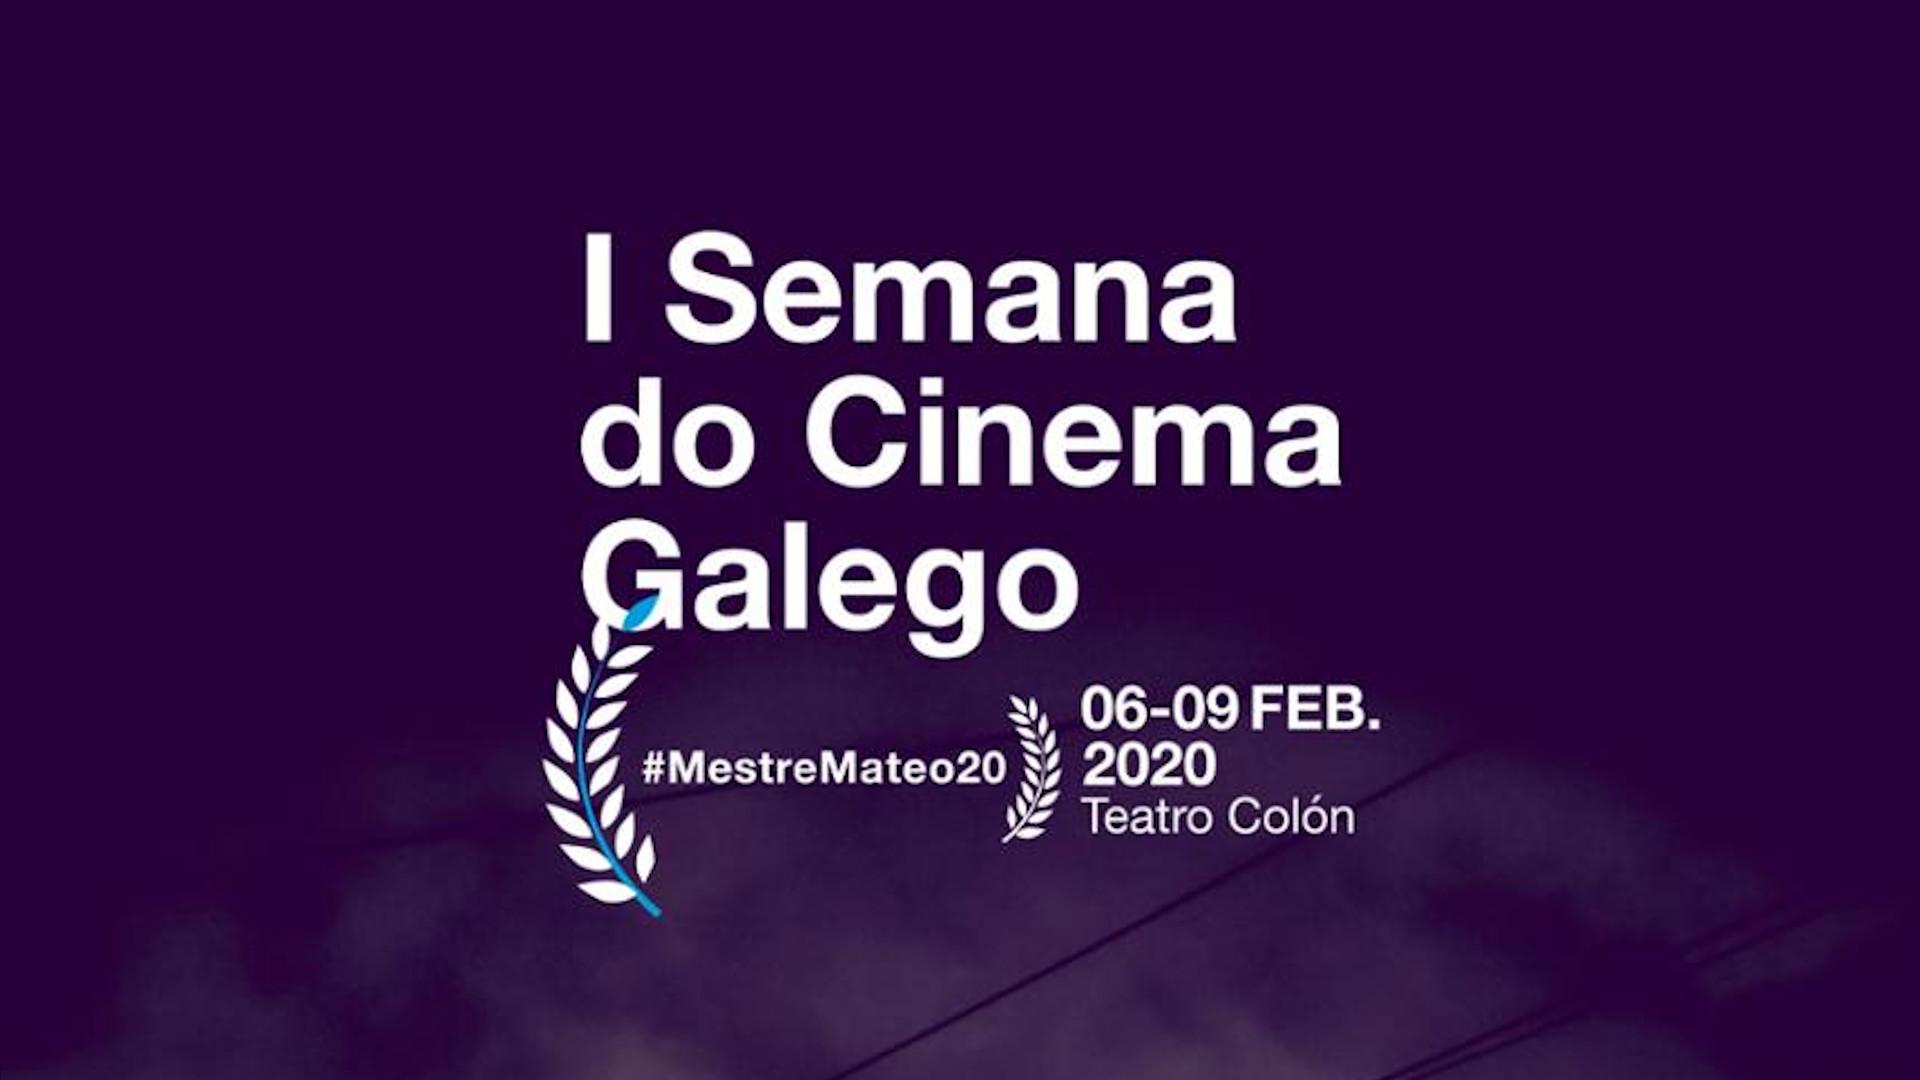 I Semana do Cinema Galego